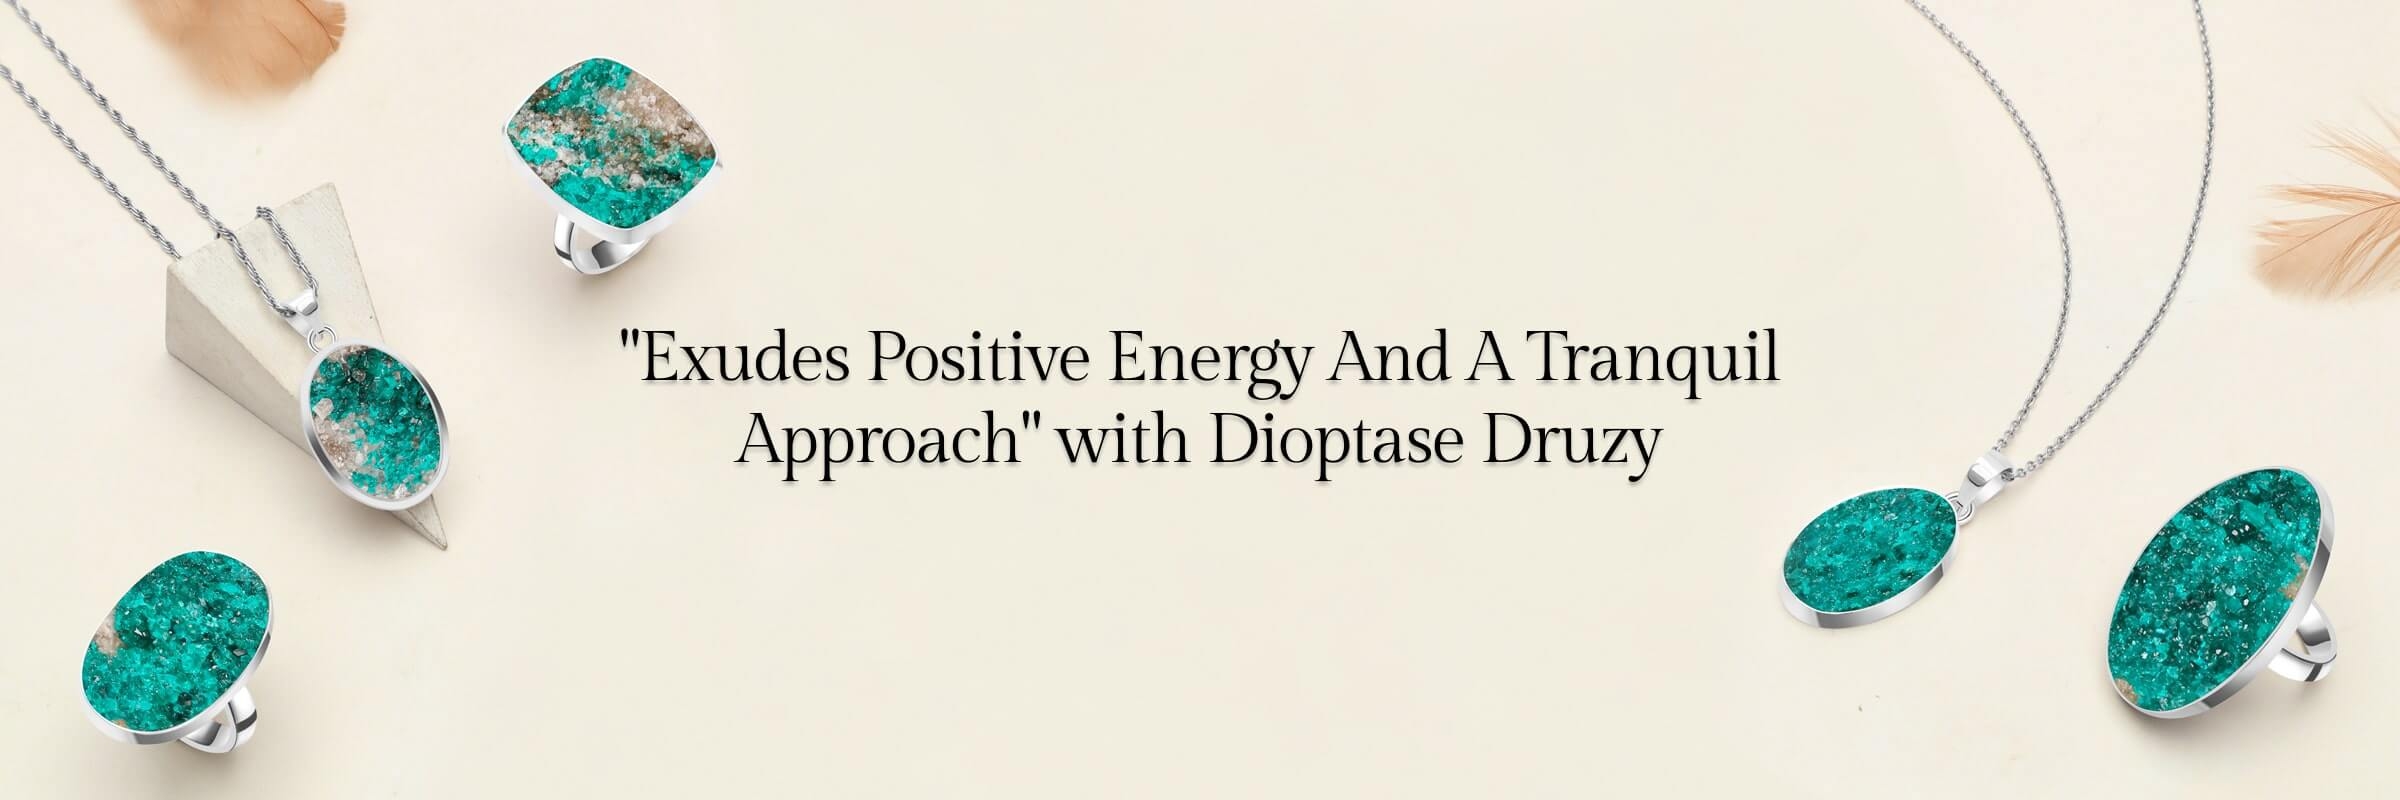 Dioptase Druzy Physical Healing Properties